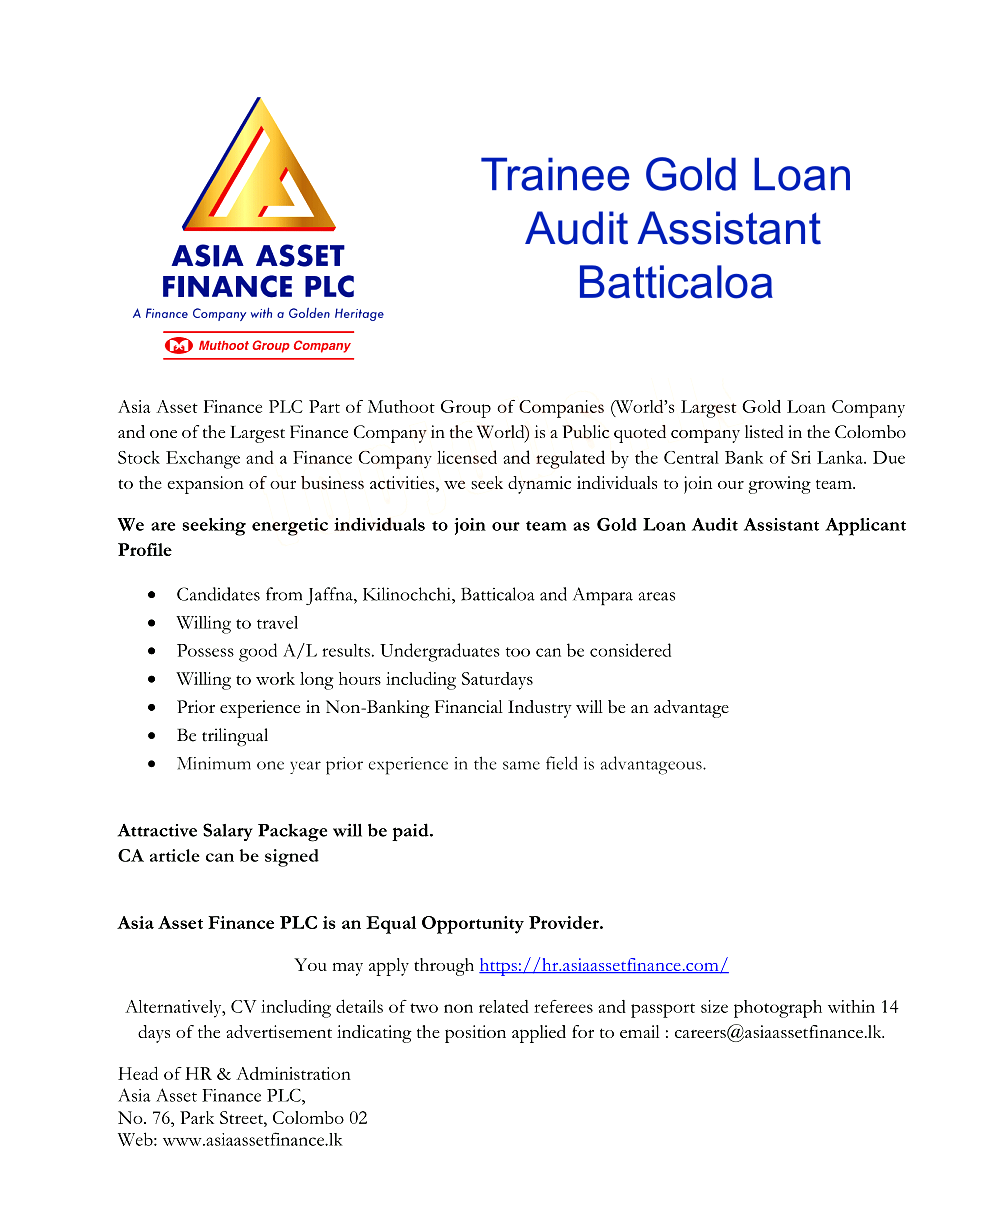 Trainee Gold Loan Audit Assistant Vacancy – Batticaloa Asia Asset Finance Jobs Vacancies Details